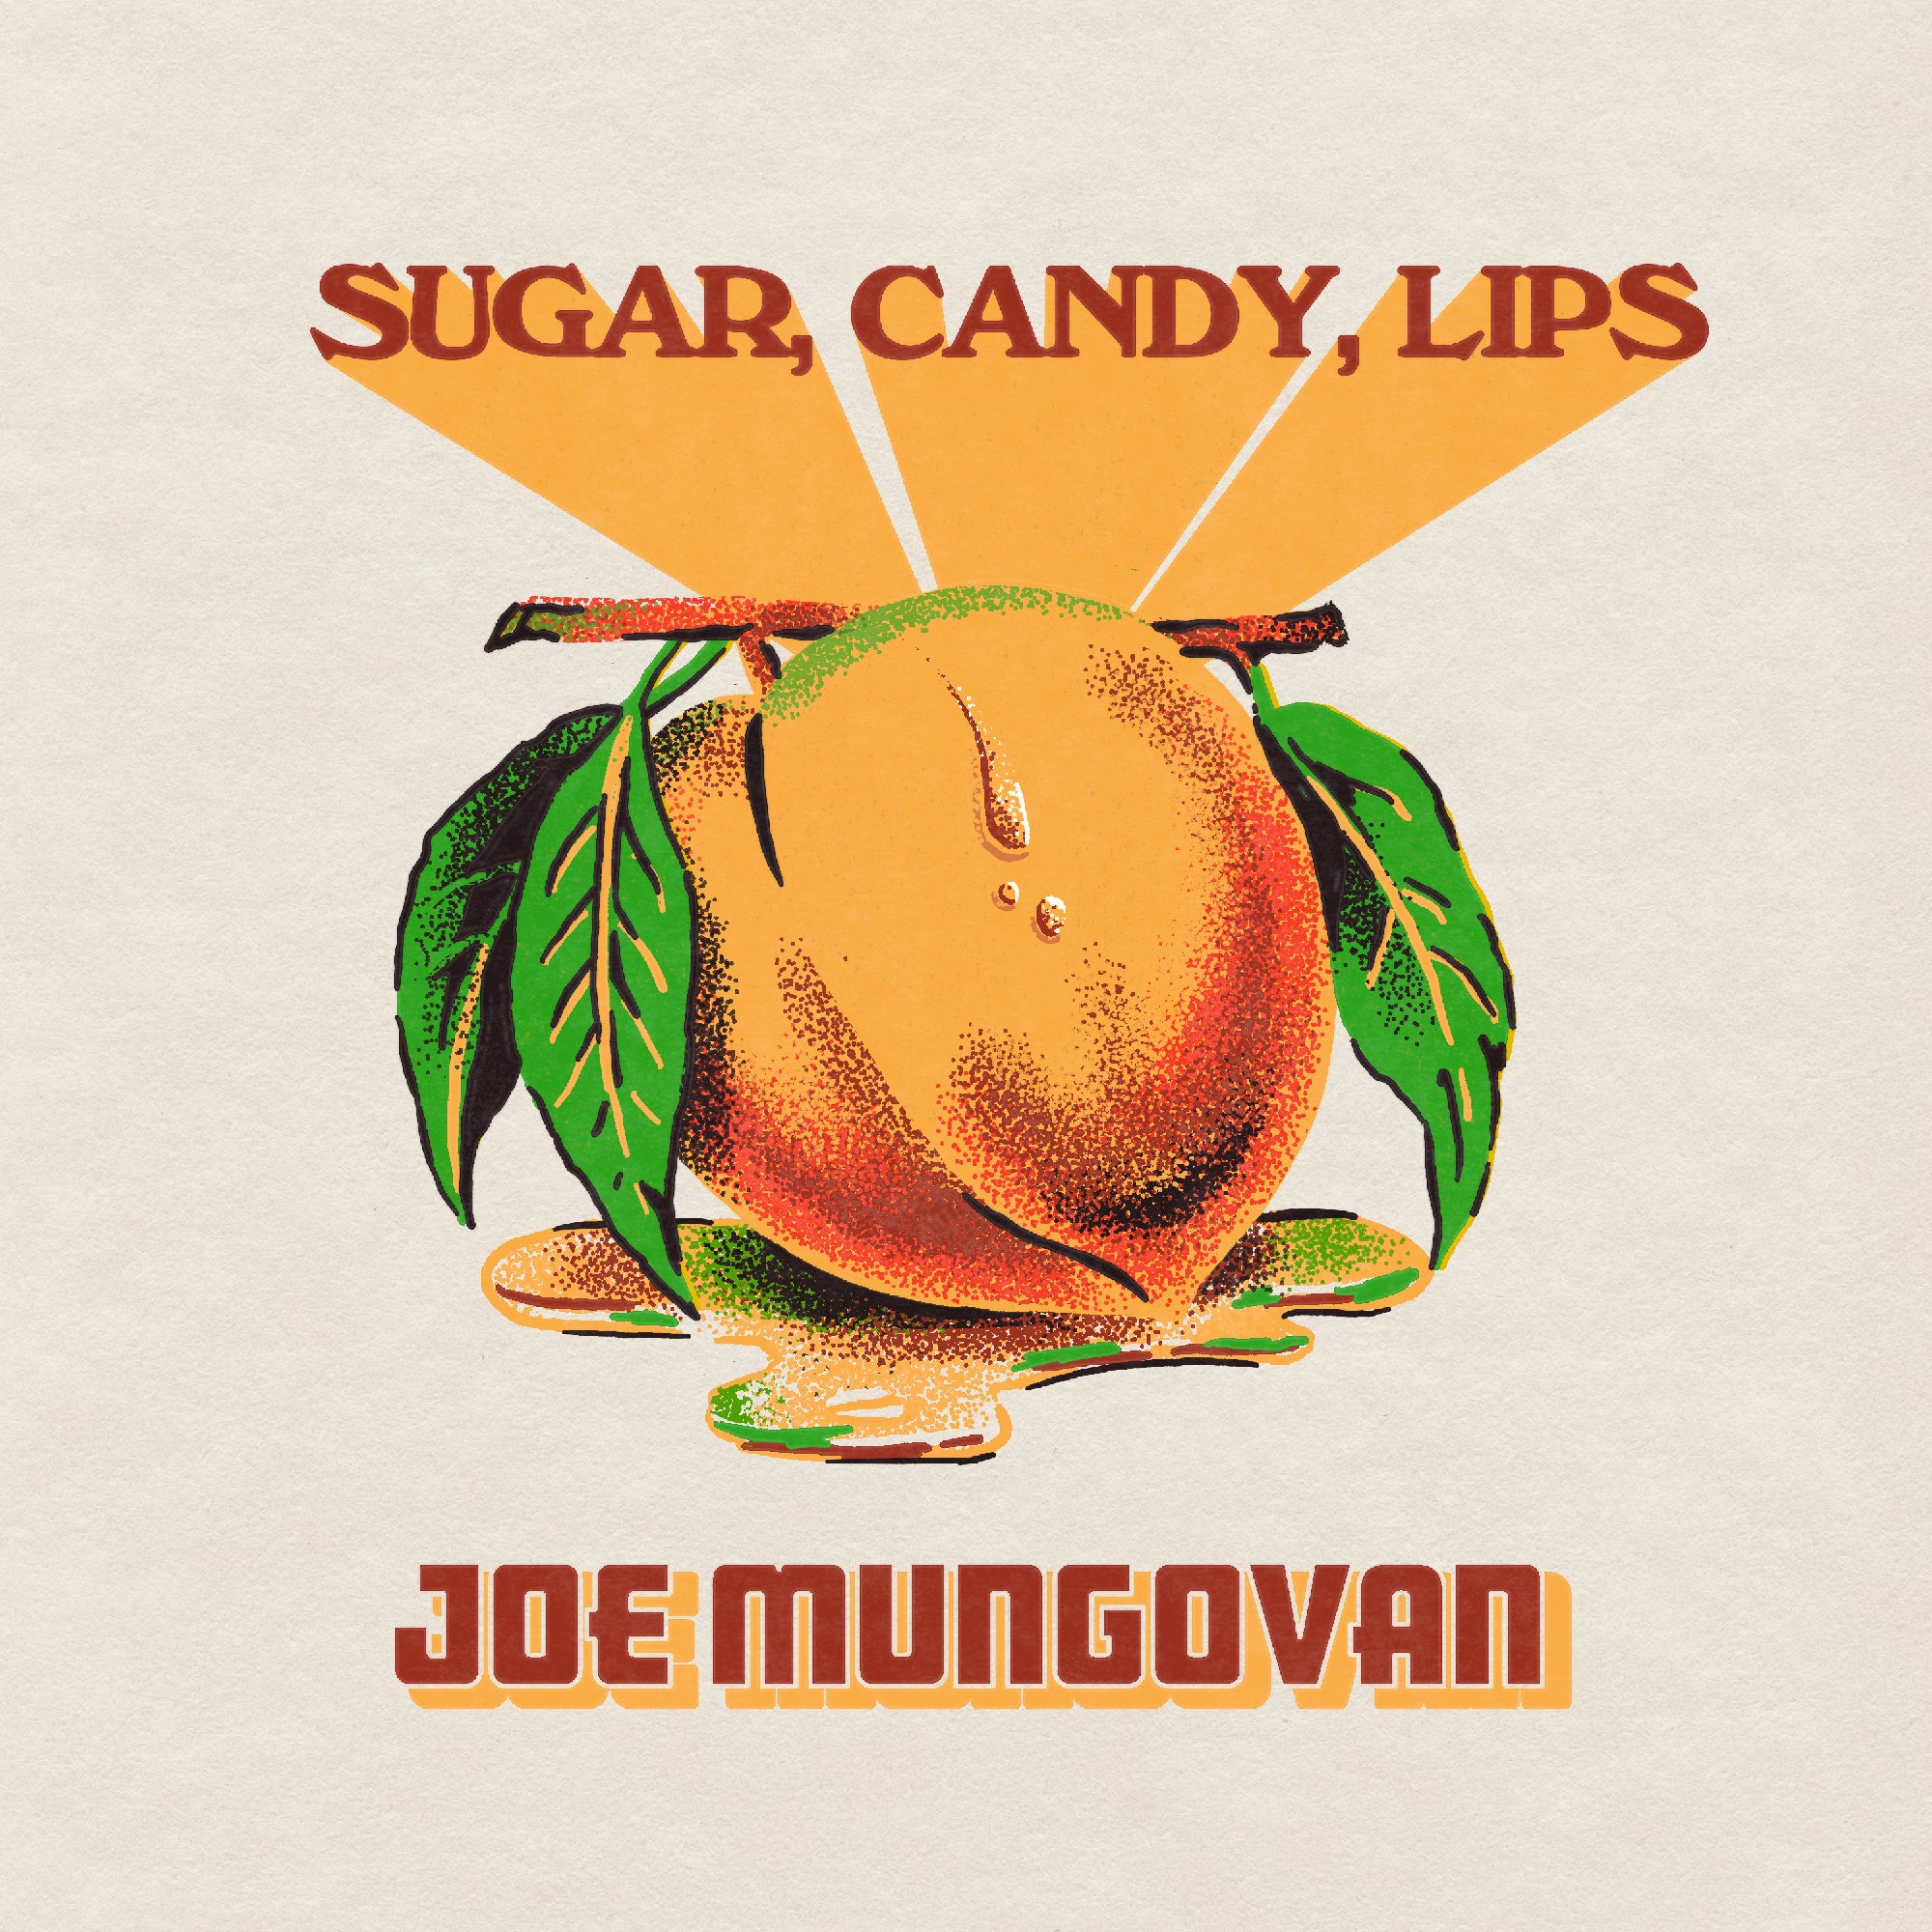 Joe Mungovan reveals his striking sophomore album 'Sugar, Candy, Lips'